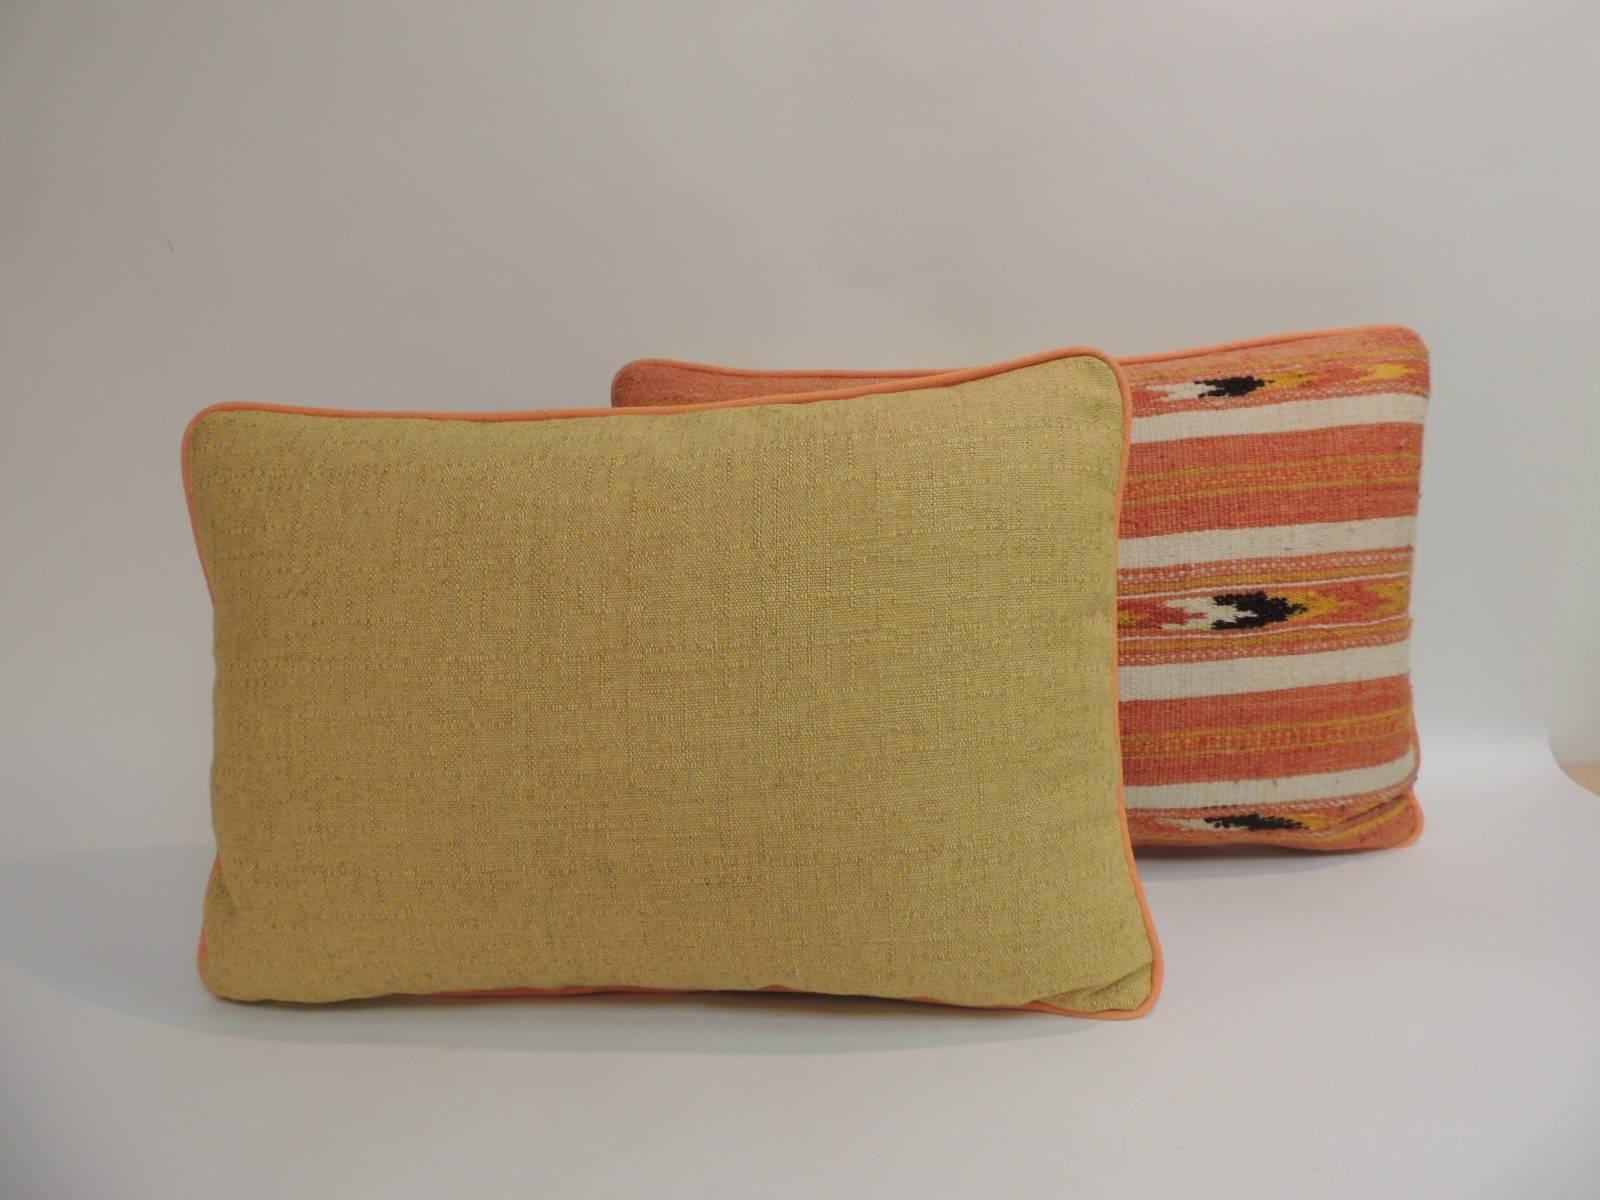 Moorish Pair of 19th Century Orange and Yellow Turkish Woven Lumbar Decorative Pillows